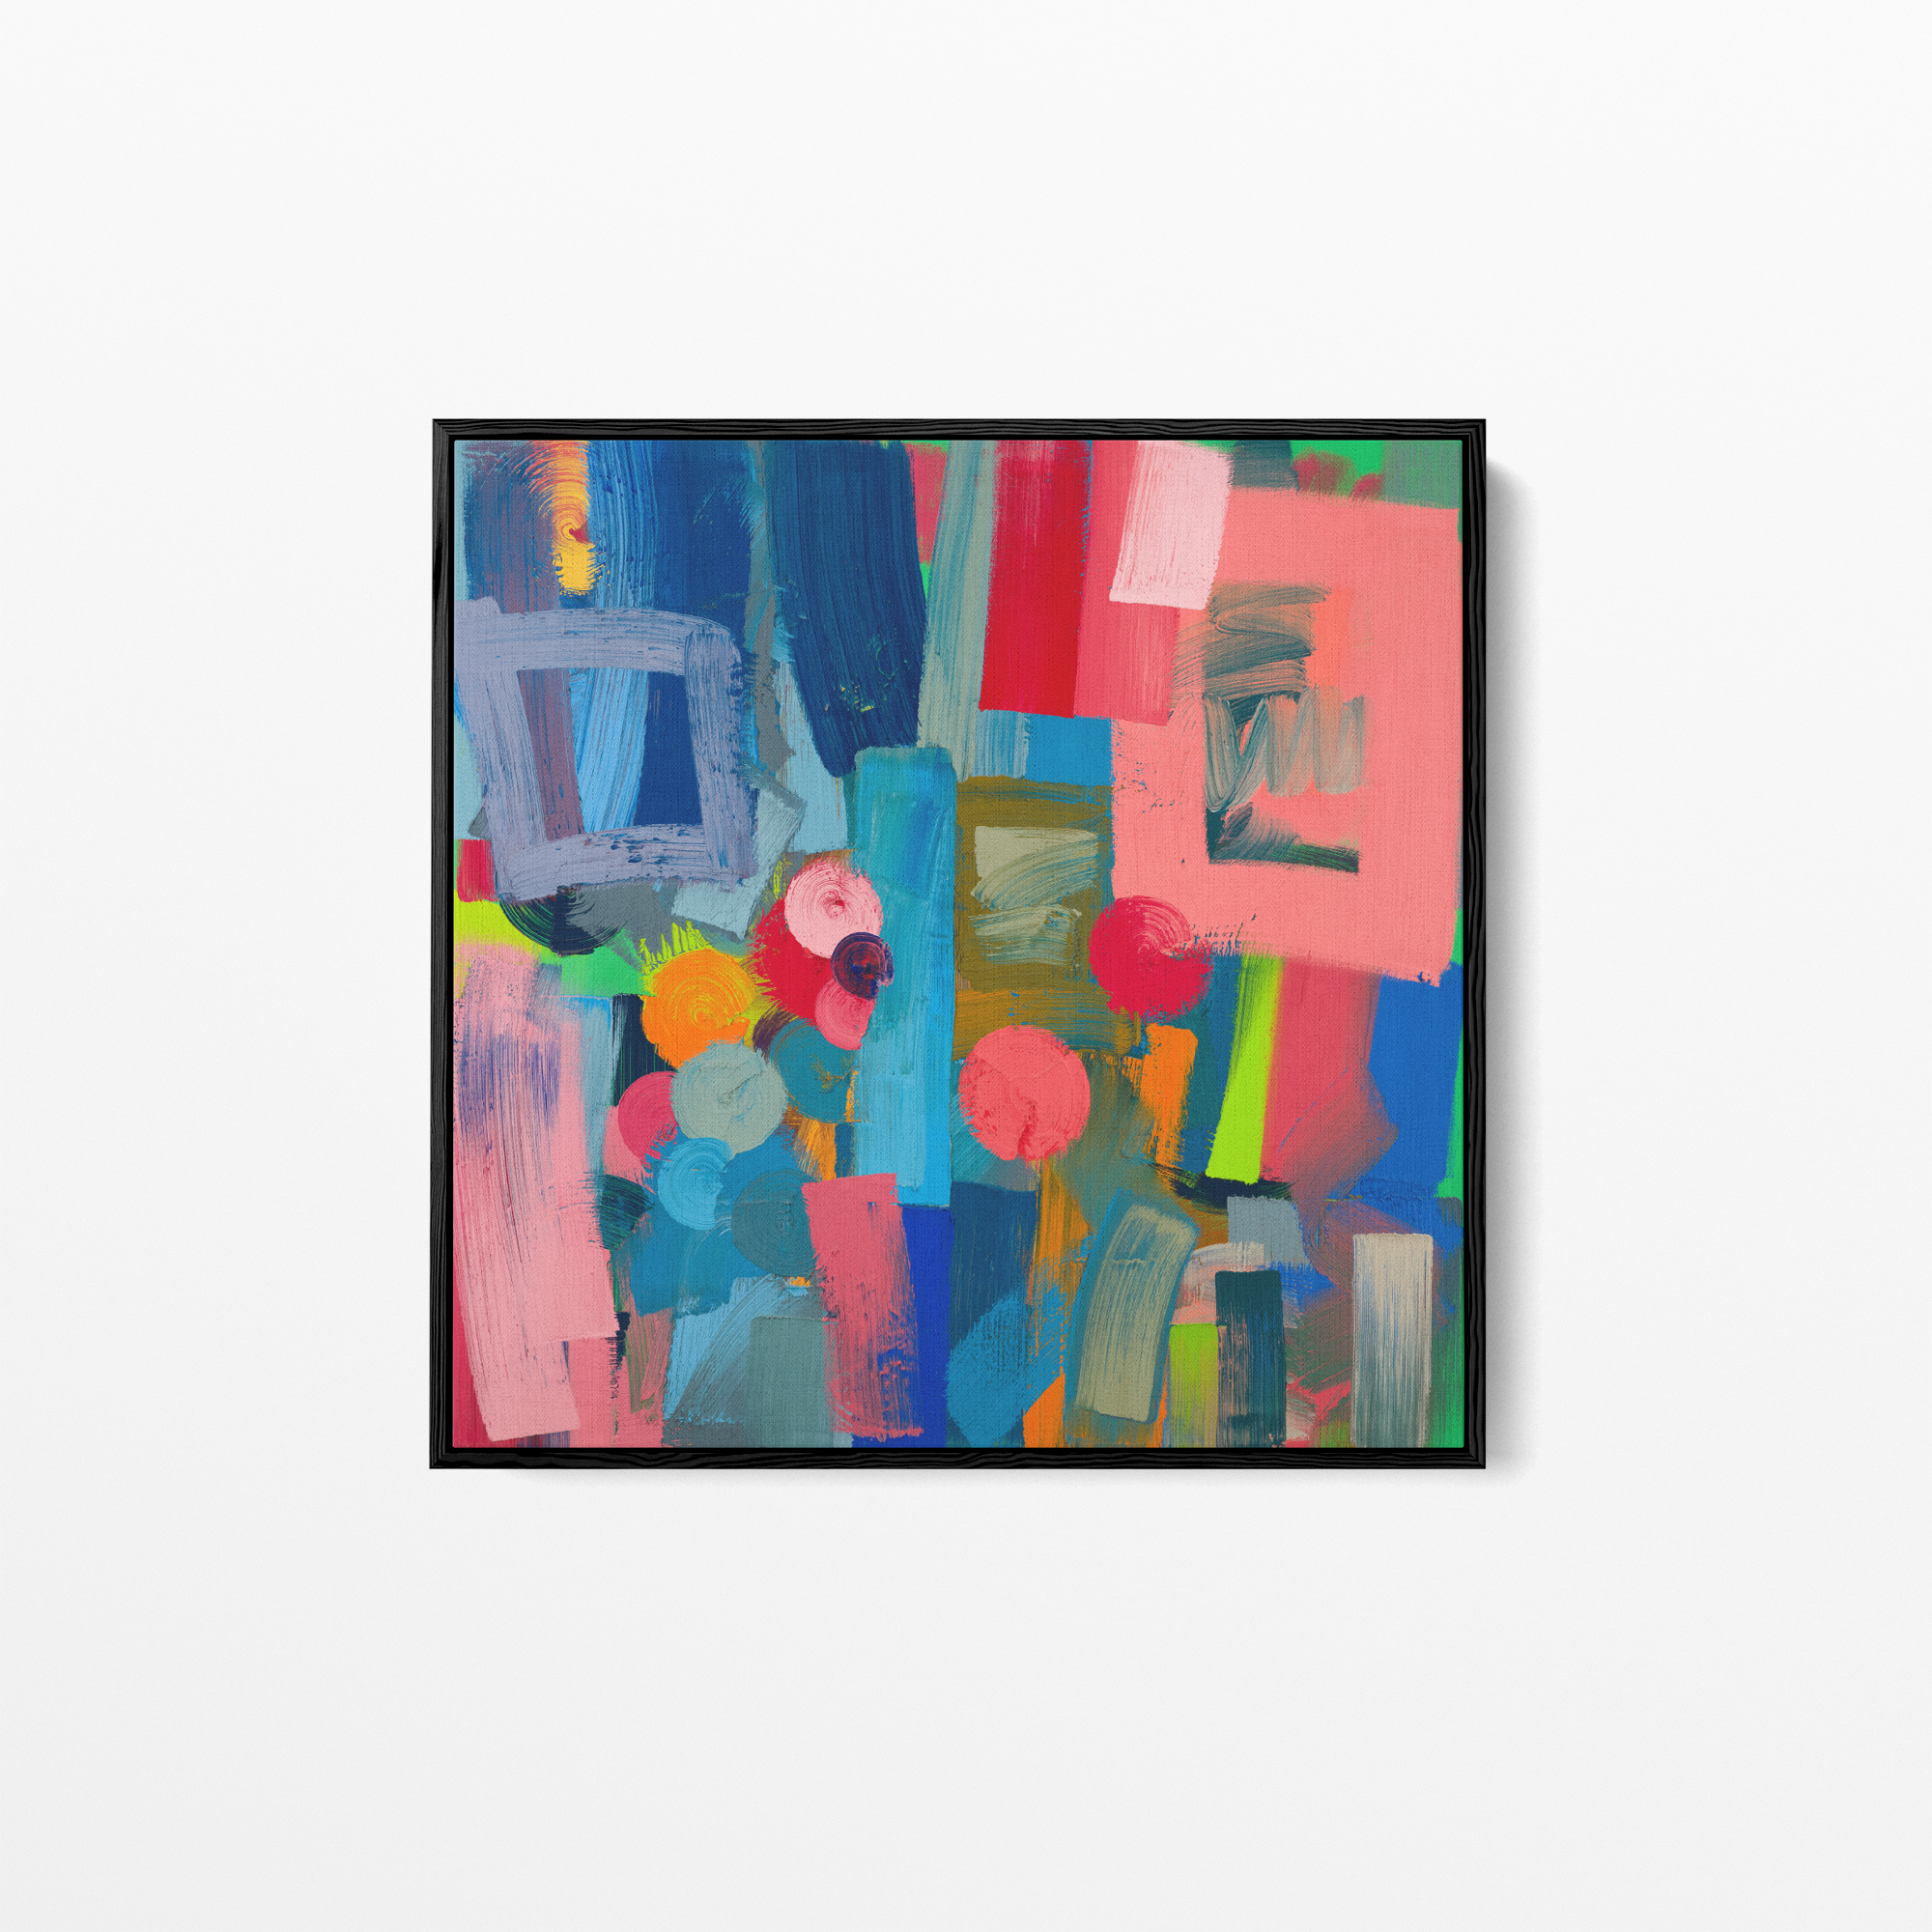 'Fassett Square', Oil on canvas